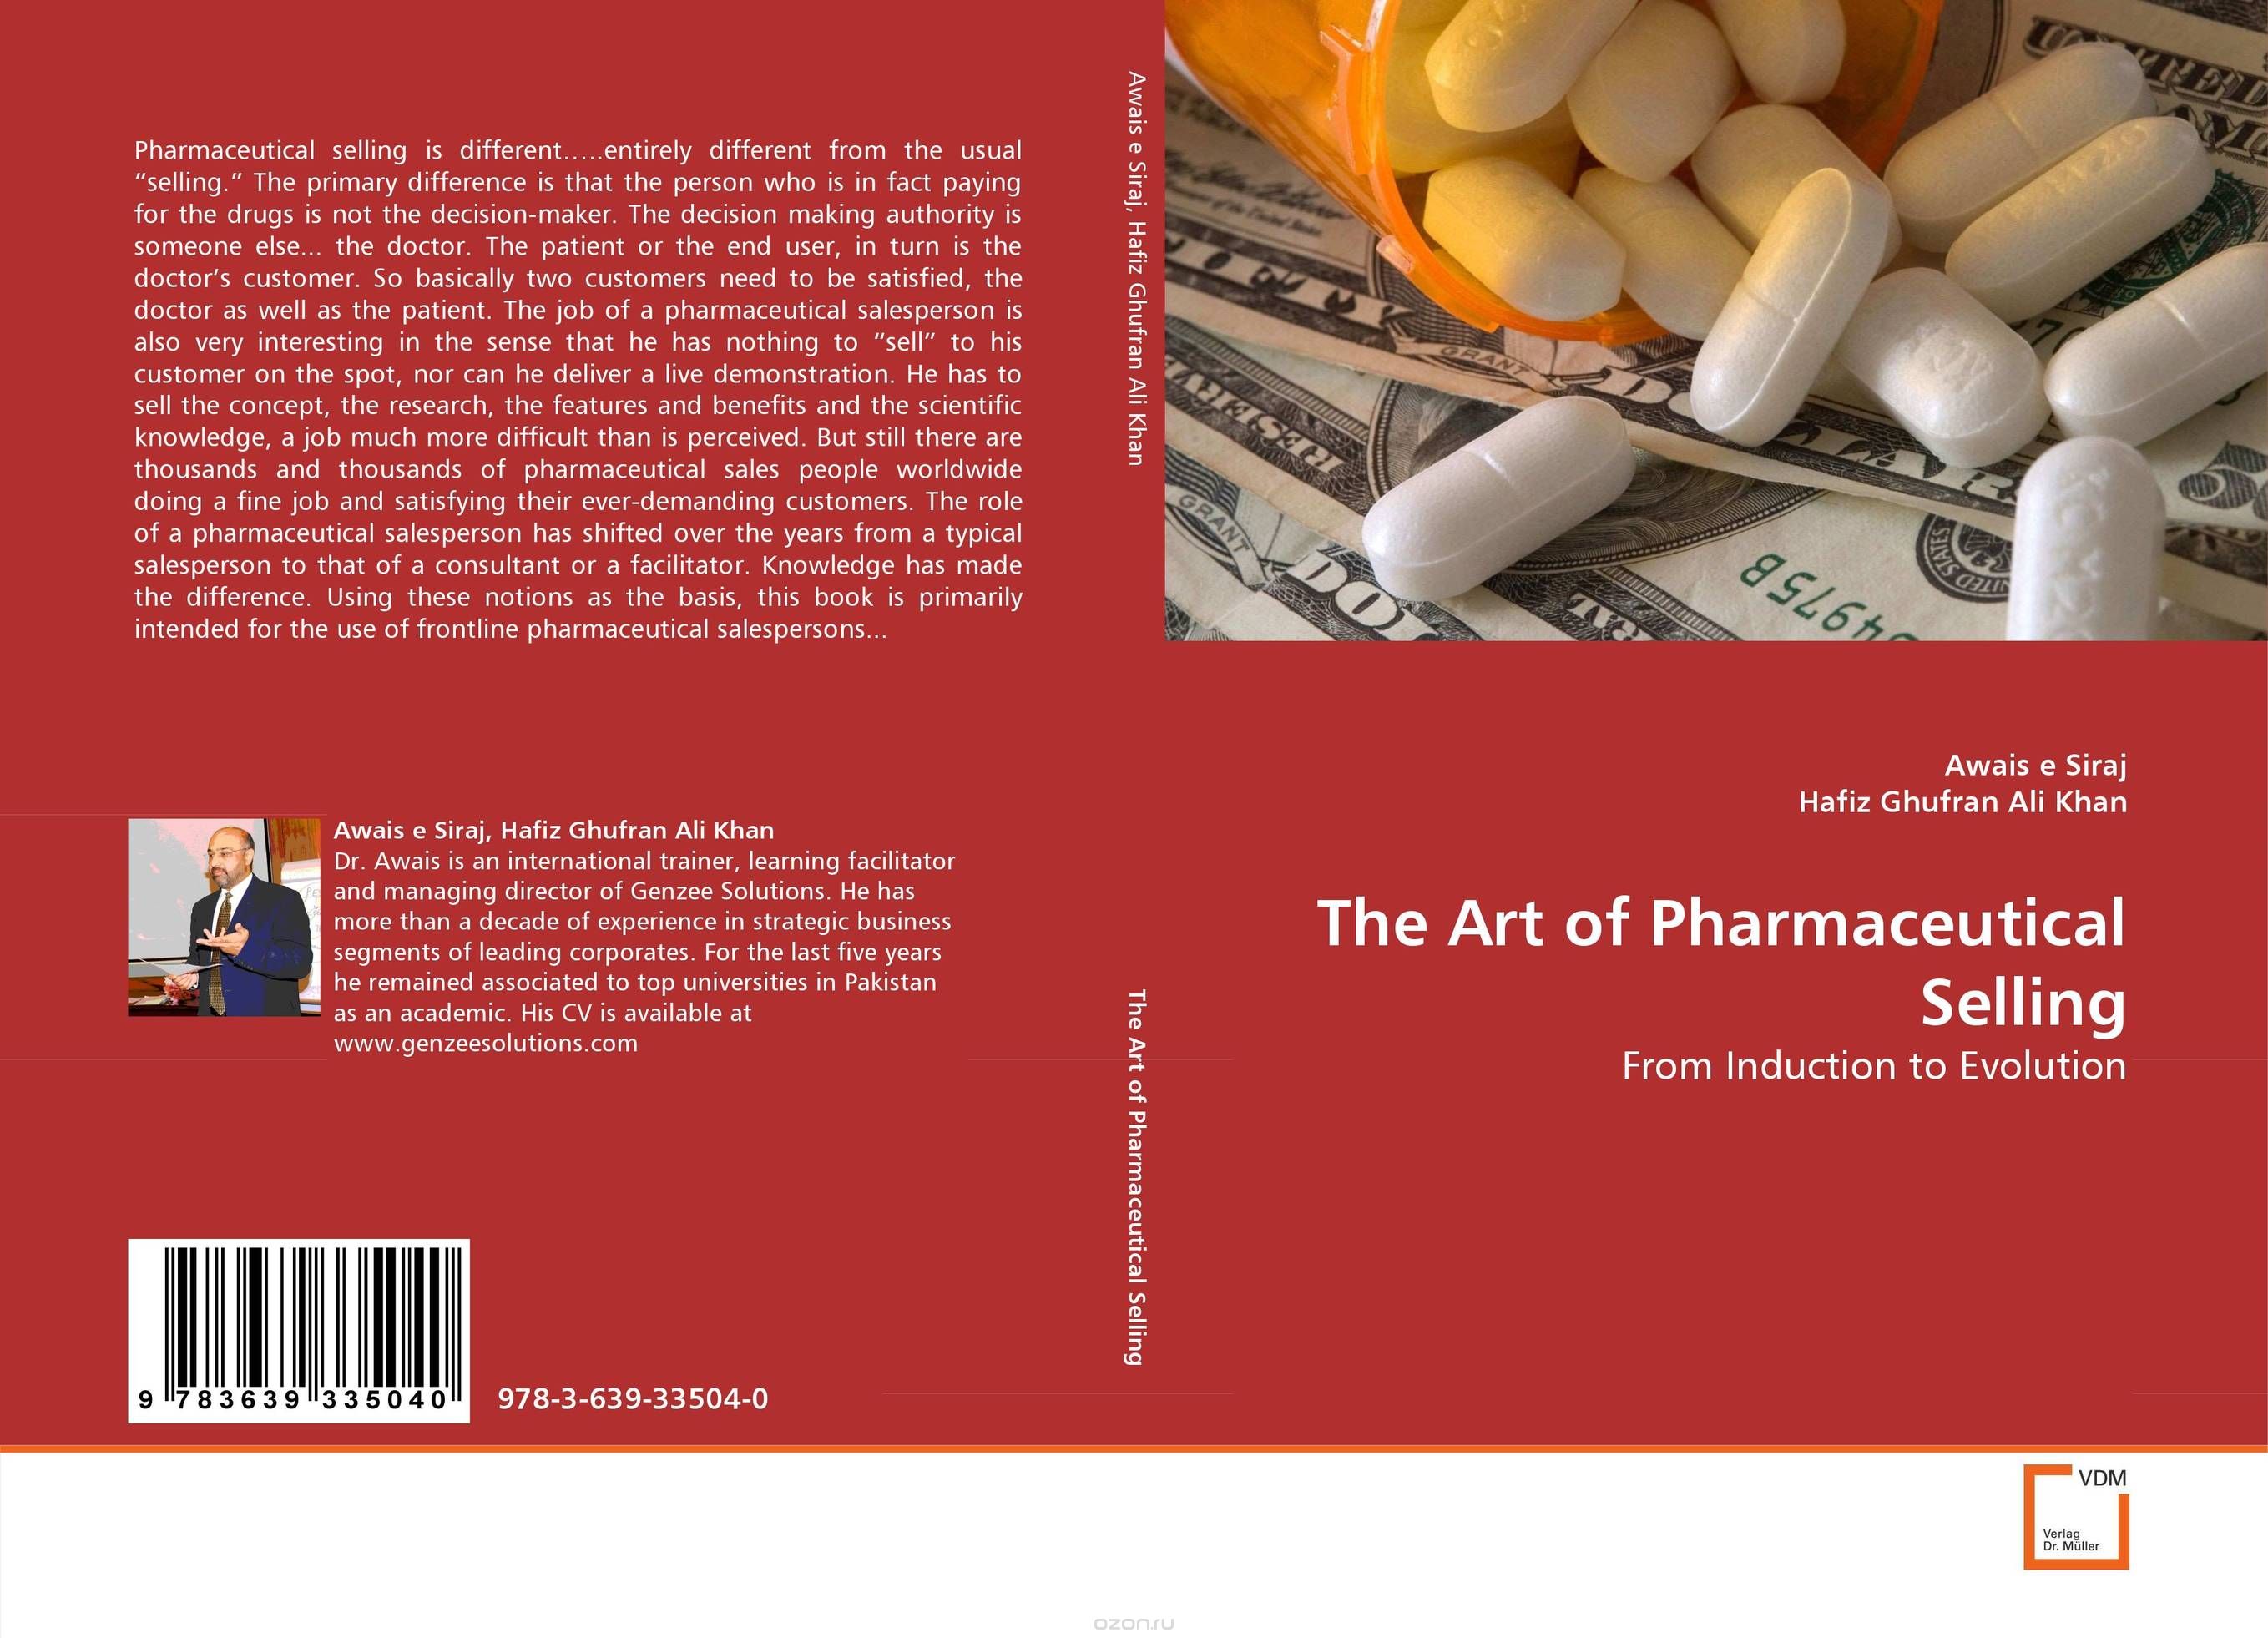 Скачать книгу "The Art of Pharmaceutical Selling"